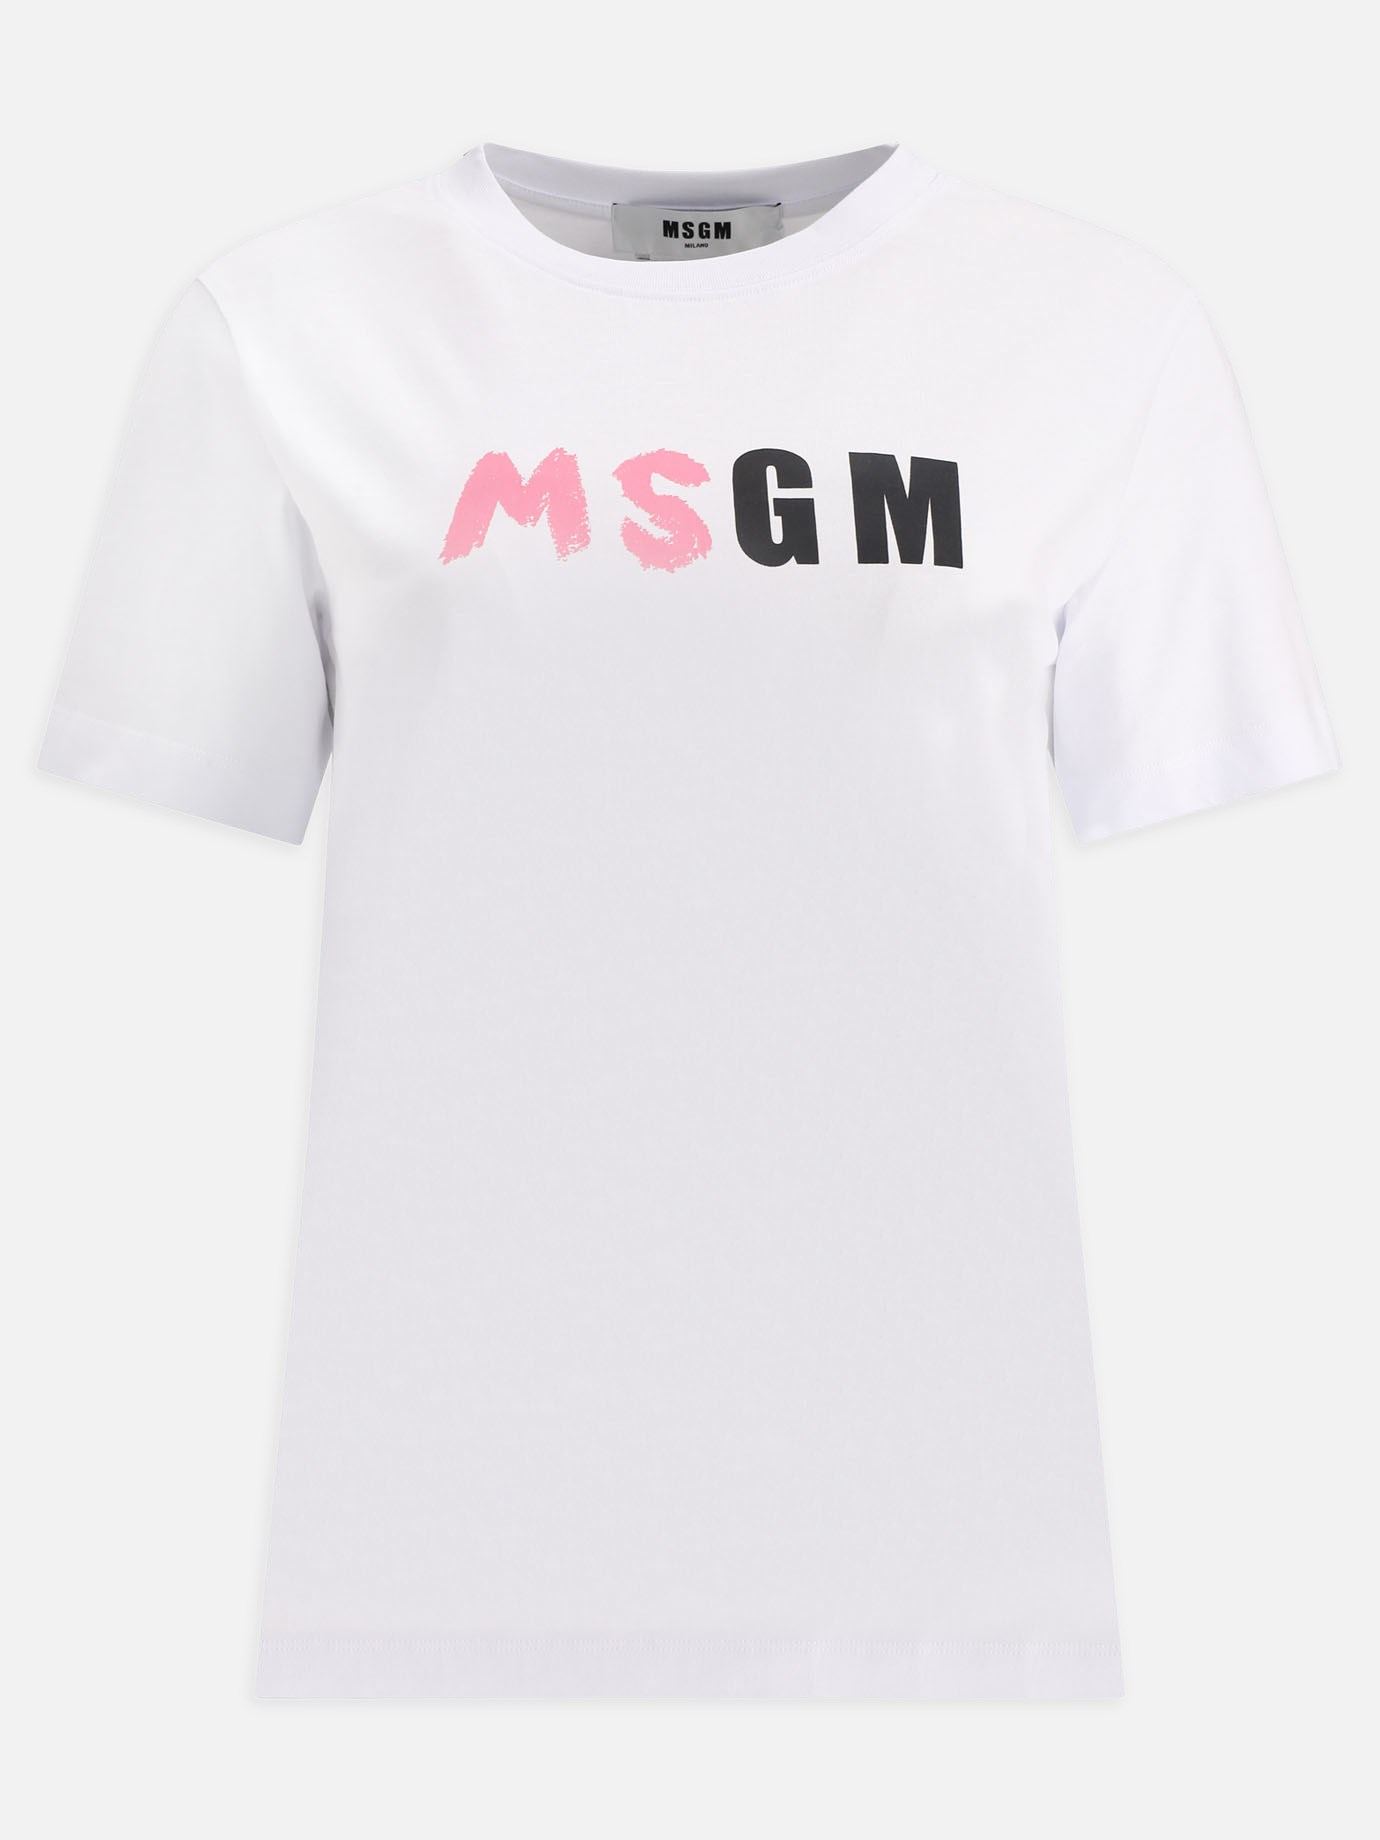  Pink Msgm  t-shirtby Msgm - 1